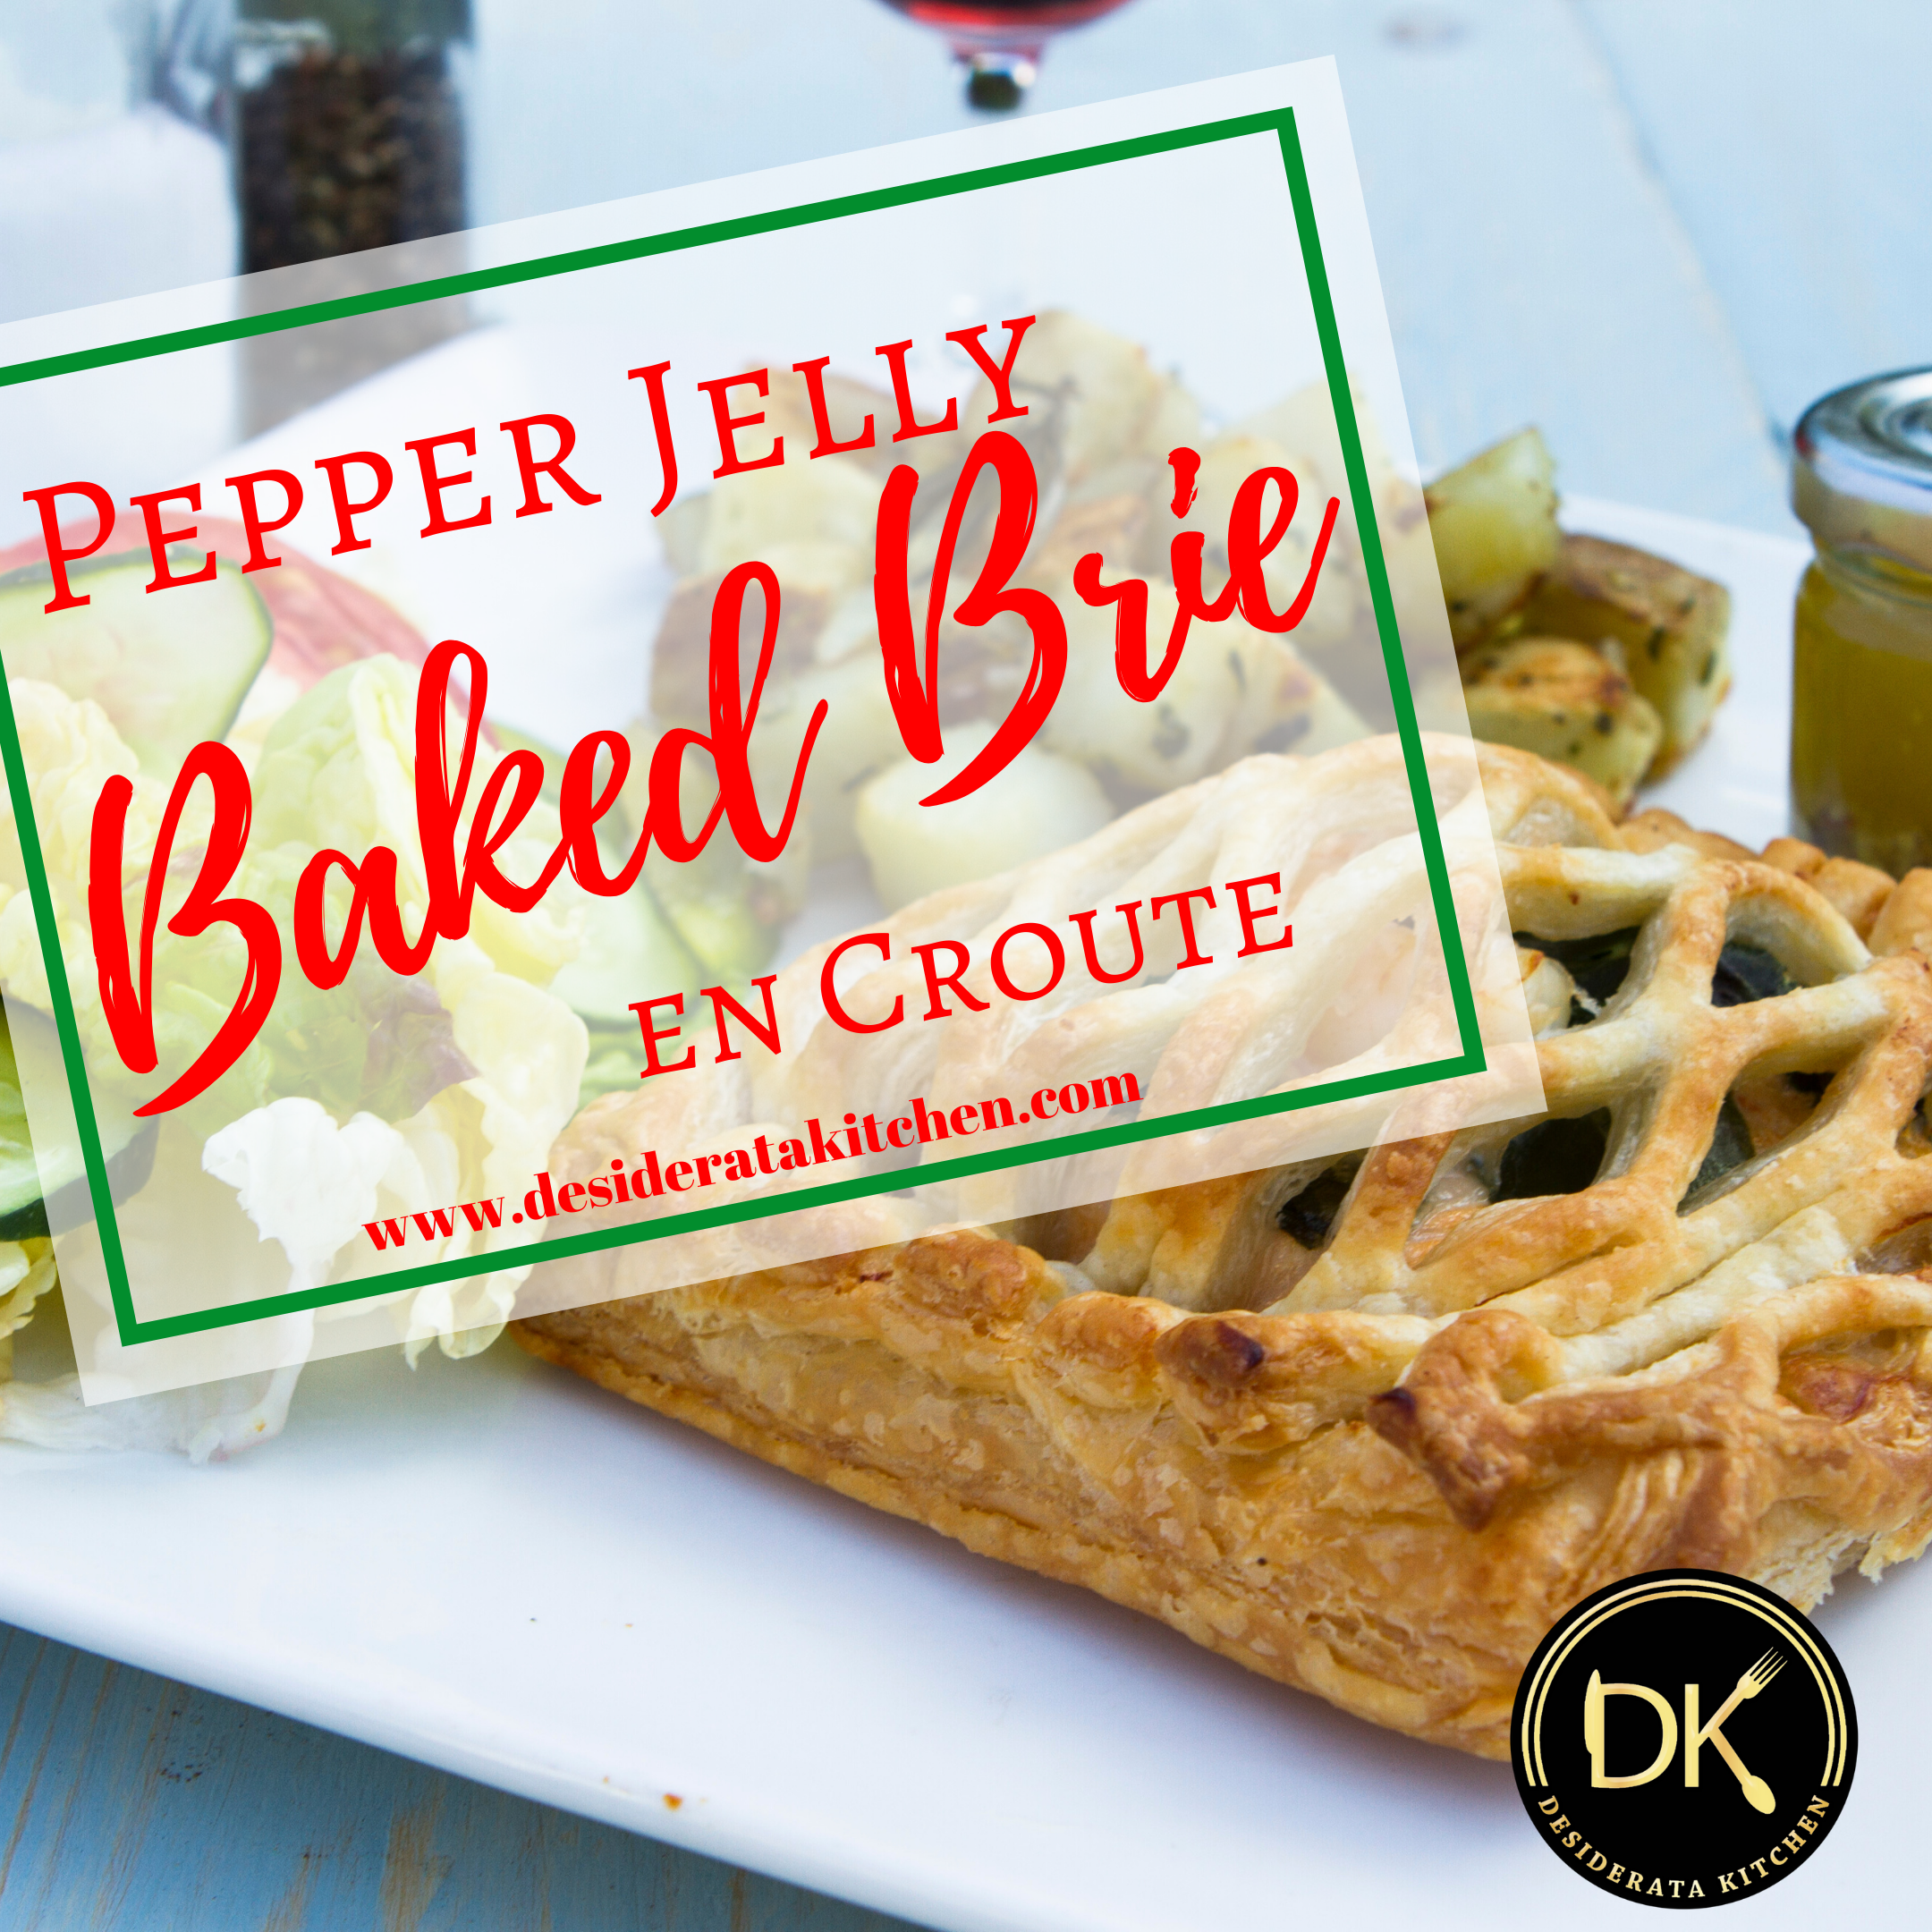 Pepper Jelly Baked Brie en Croute